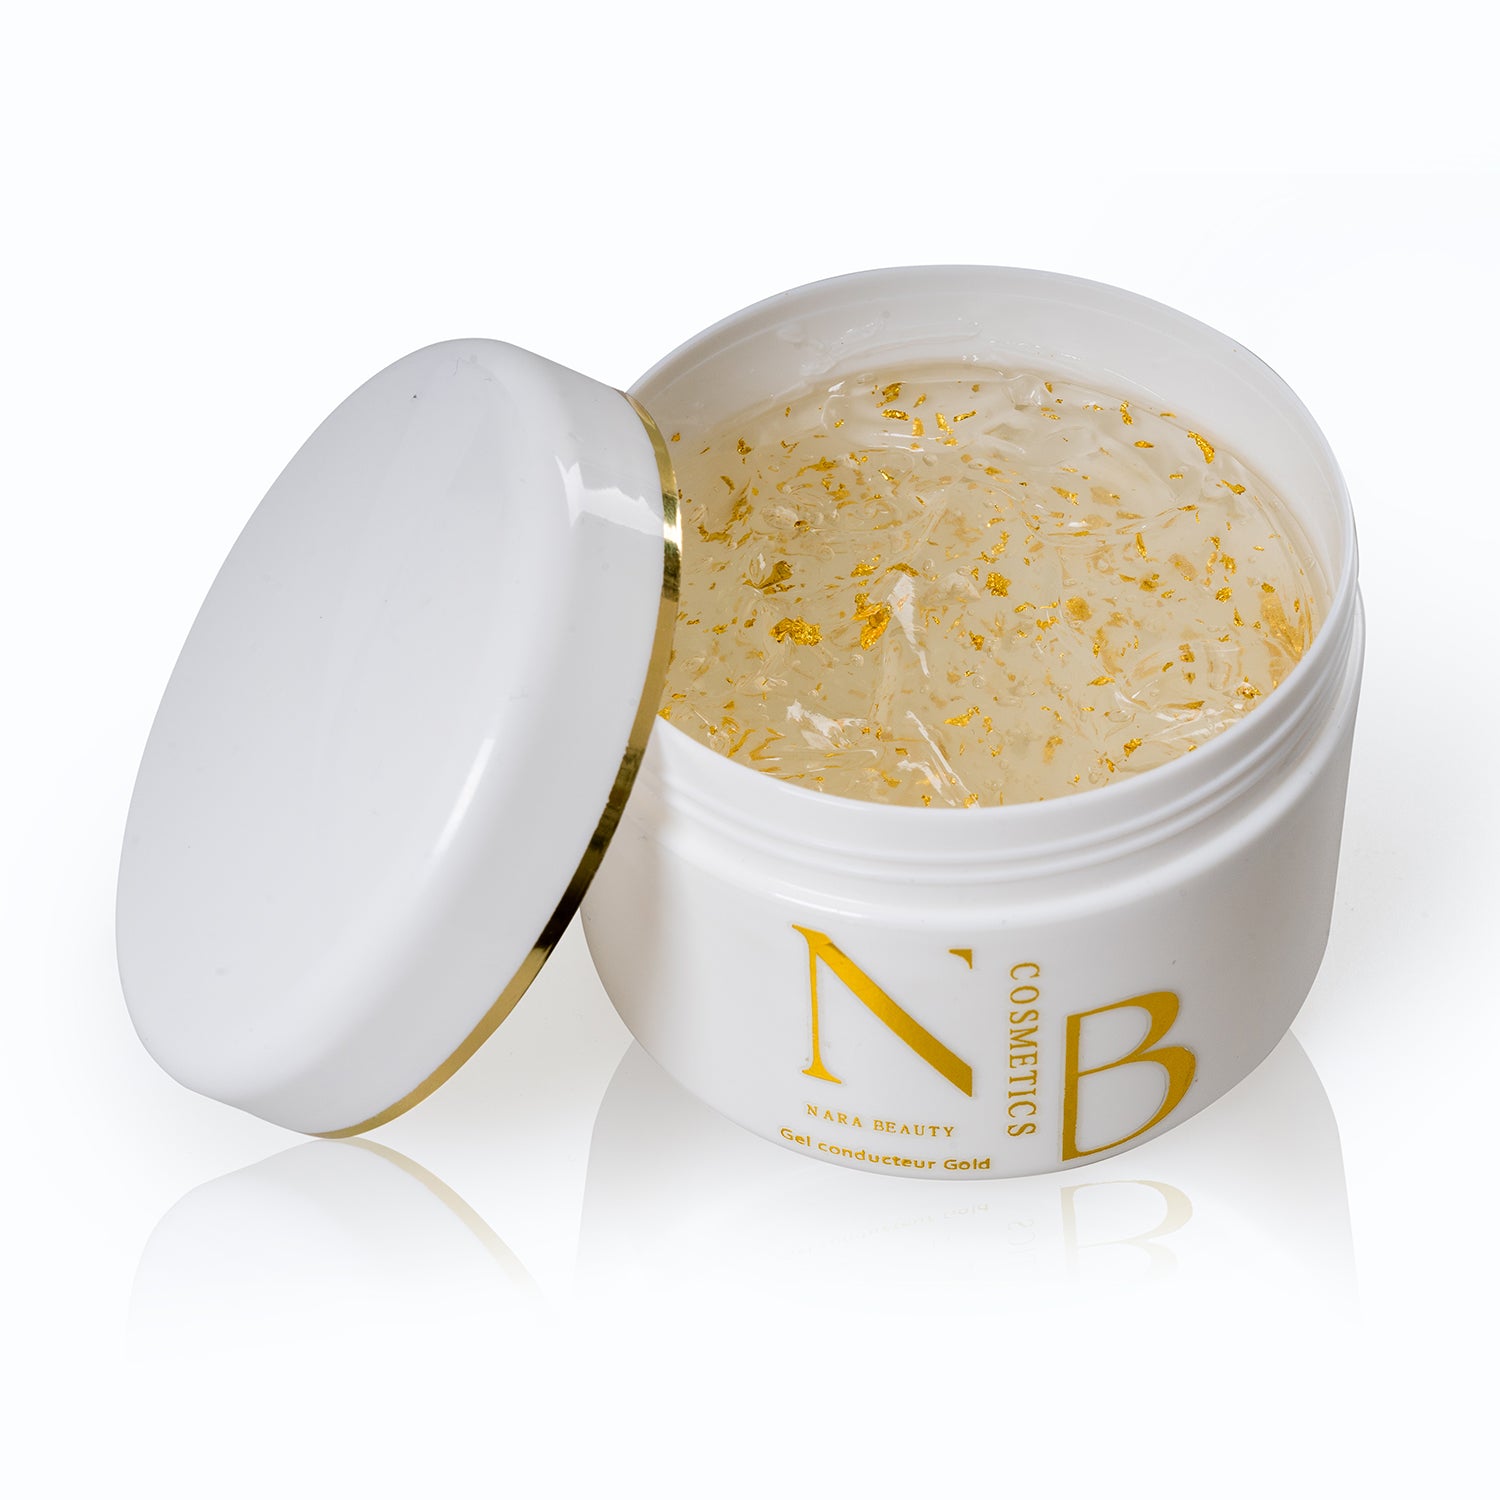 Gel conducteur visage Gold 250 ml – Nara Beauty Cosmetics